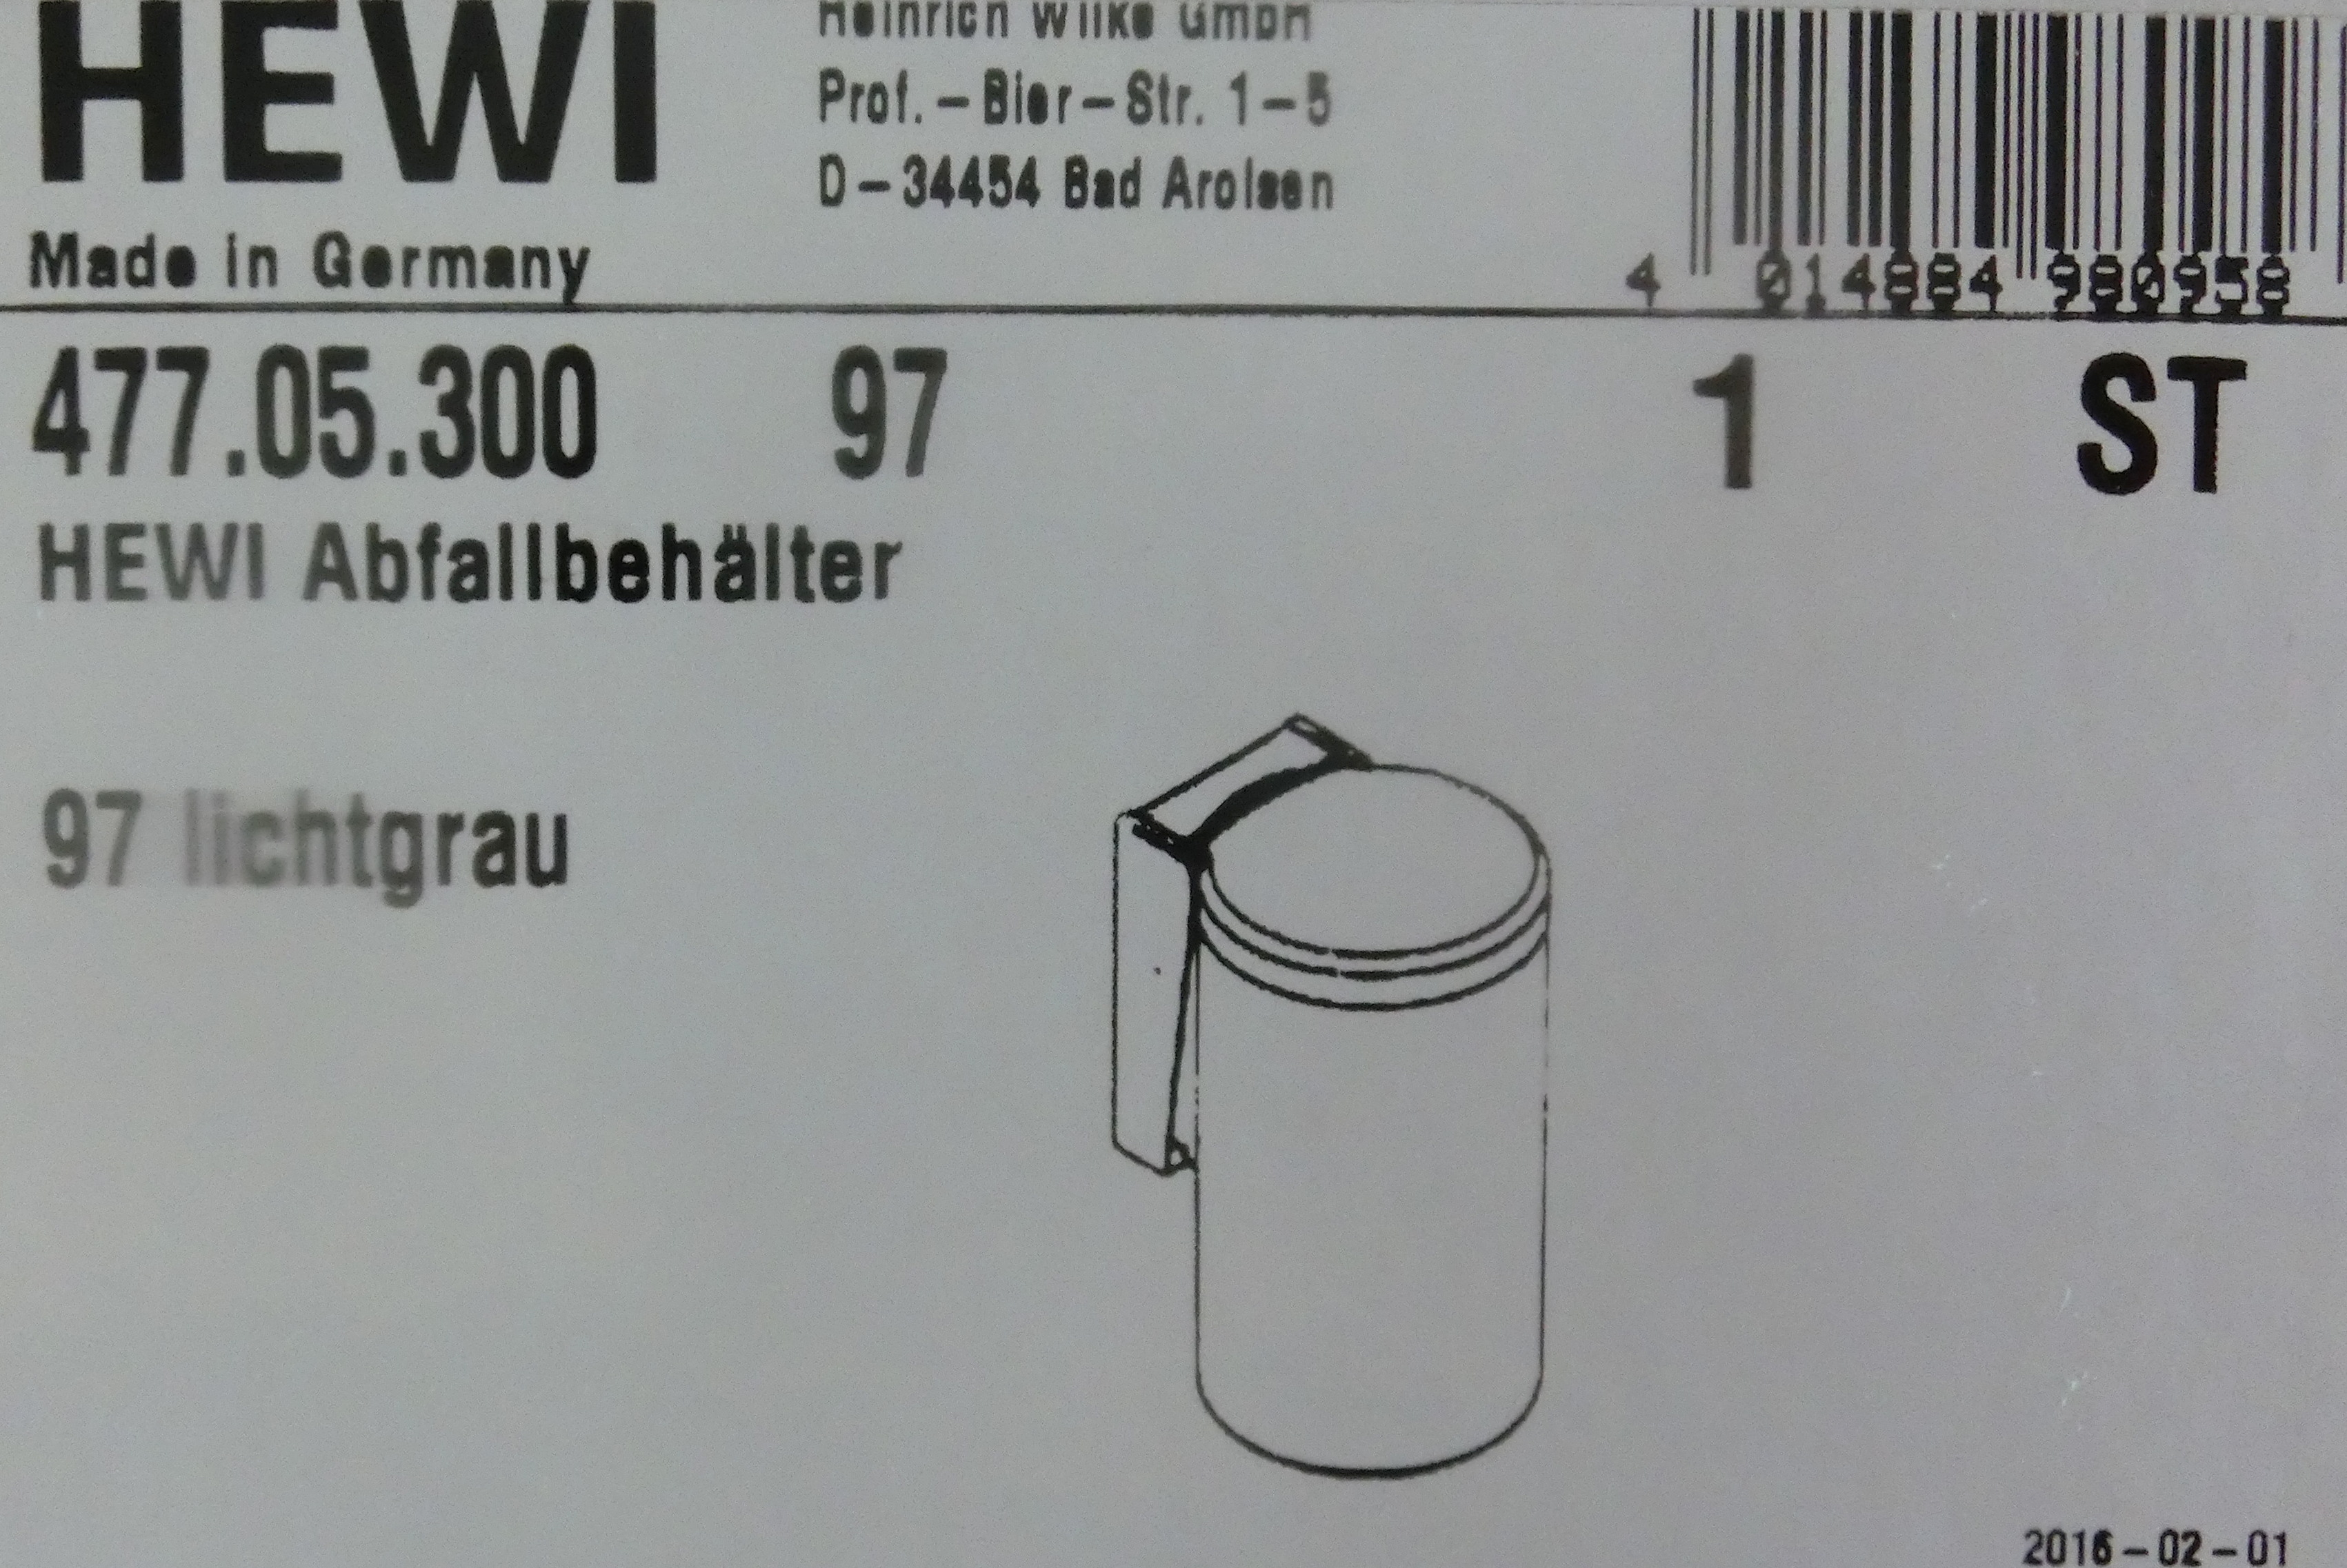 Hewi Serie 477 Abfallbehälter signalweiß; 477.05.300-98 